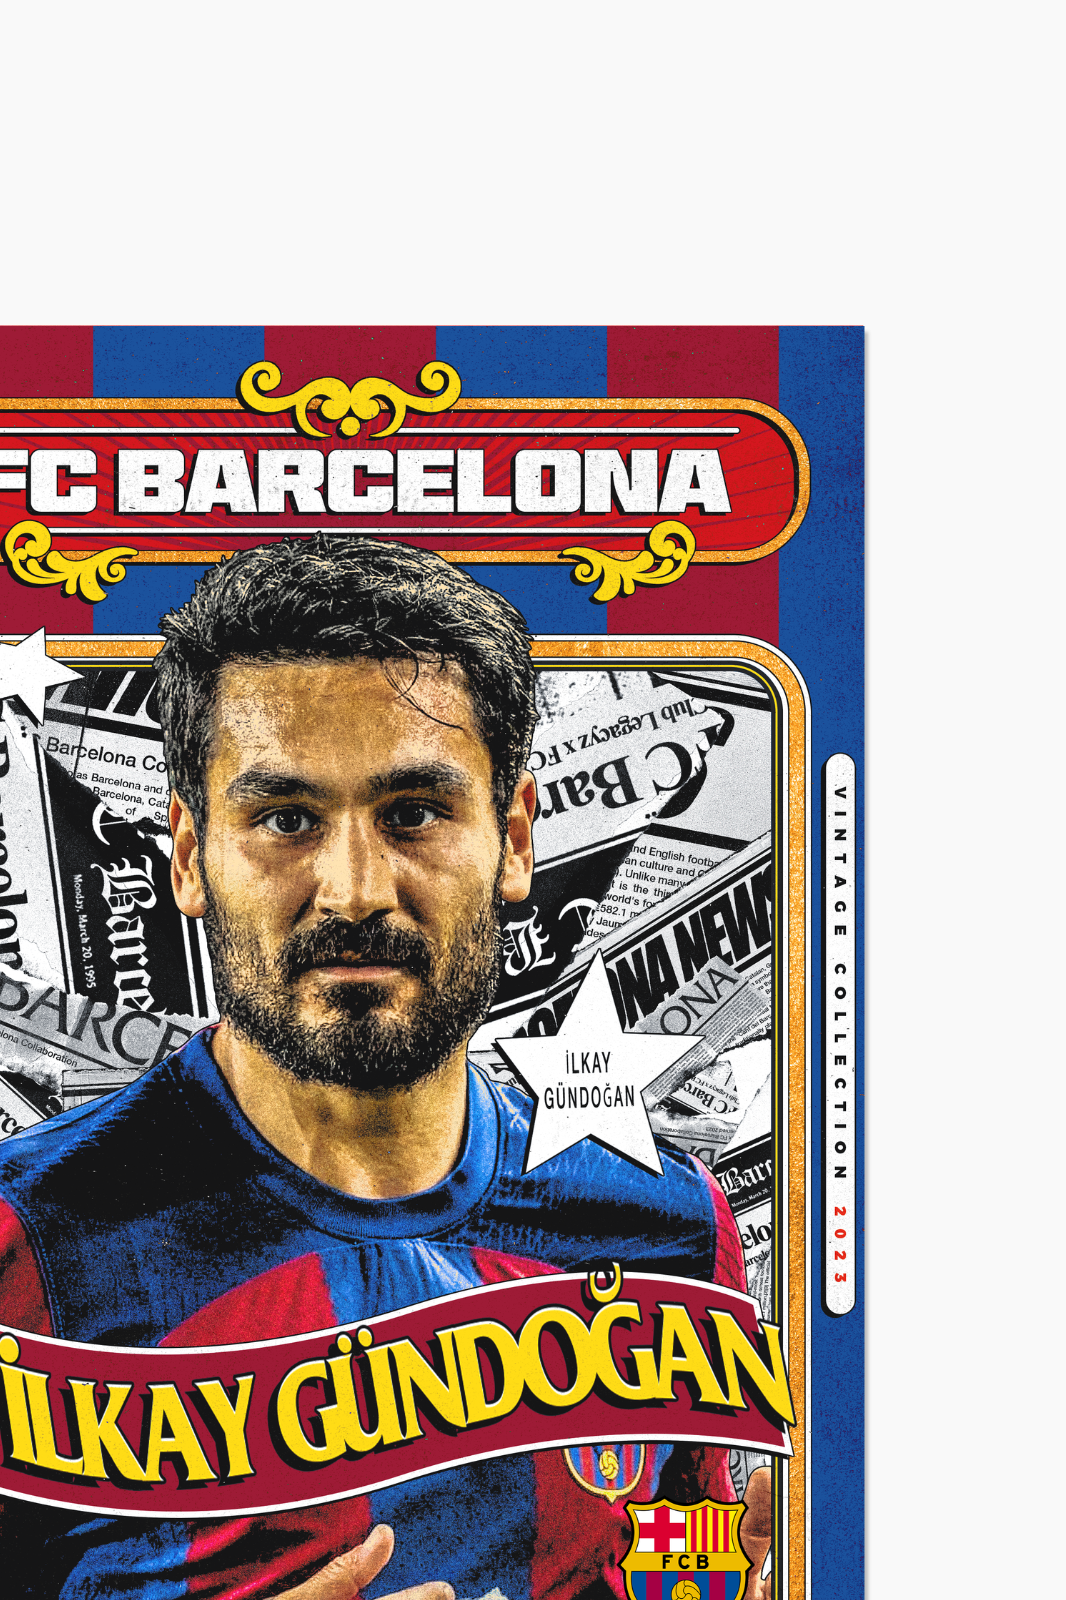 FC Barcelona - İlkay Gündogan Retro poster limited to 100